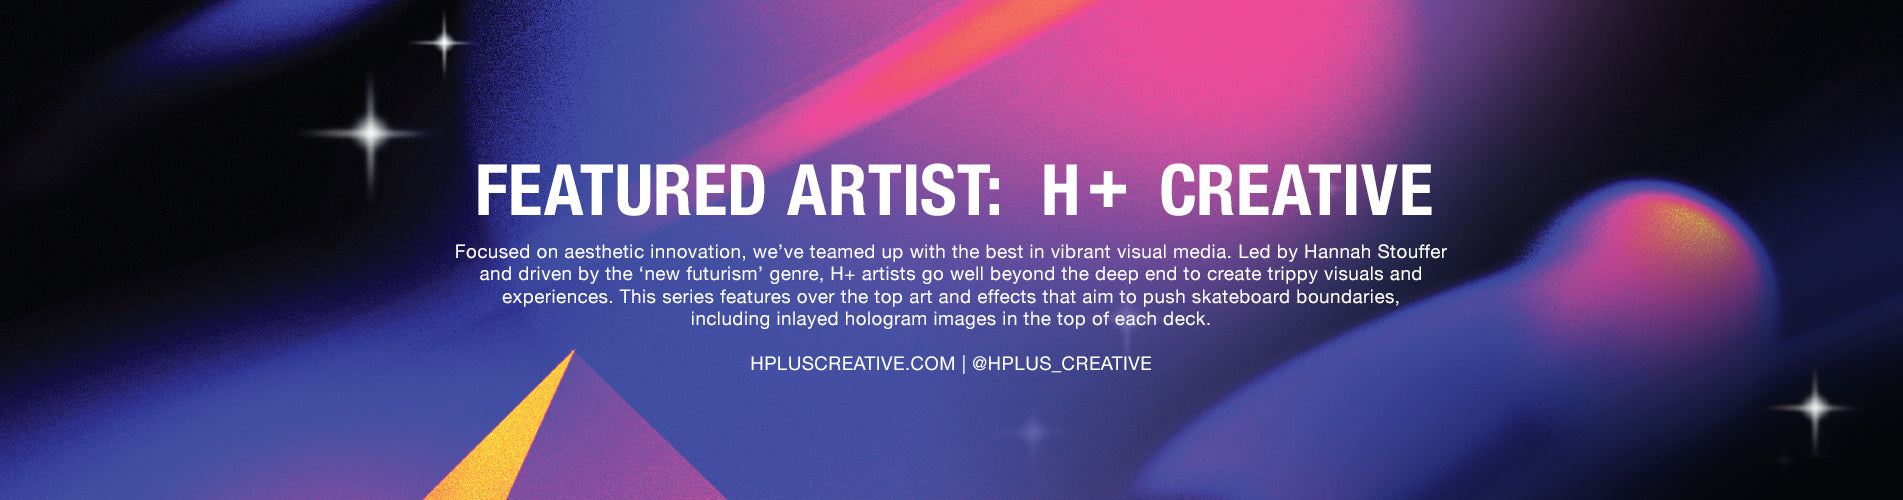 H+ Creative banner